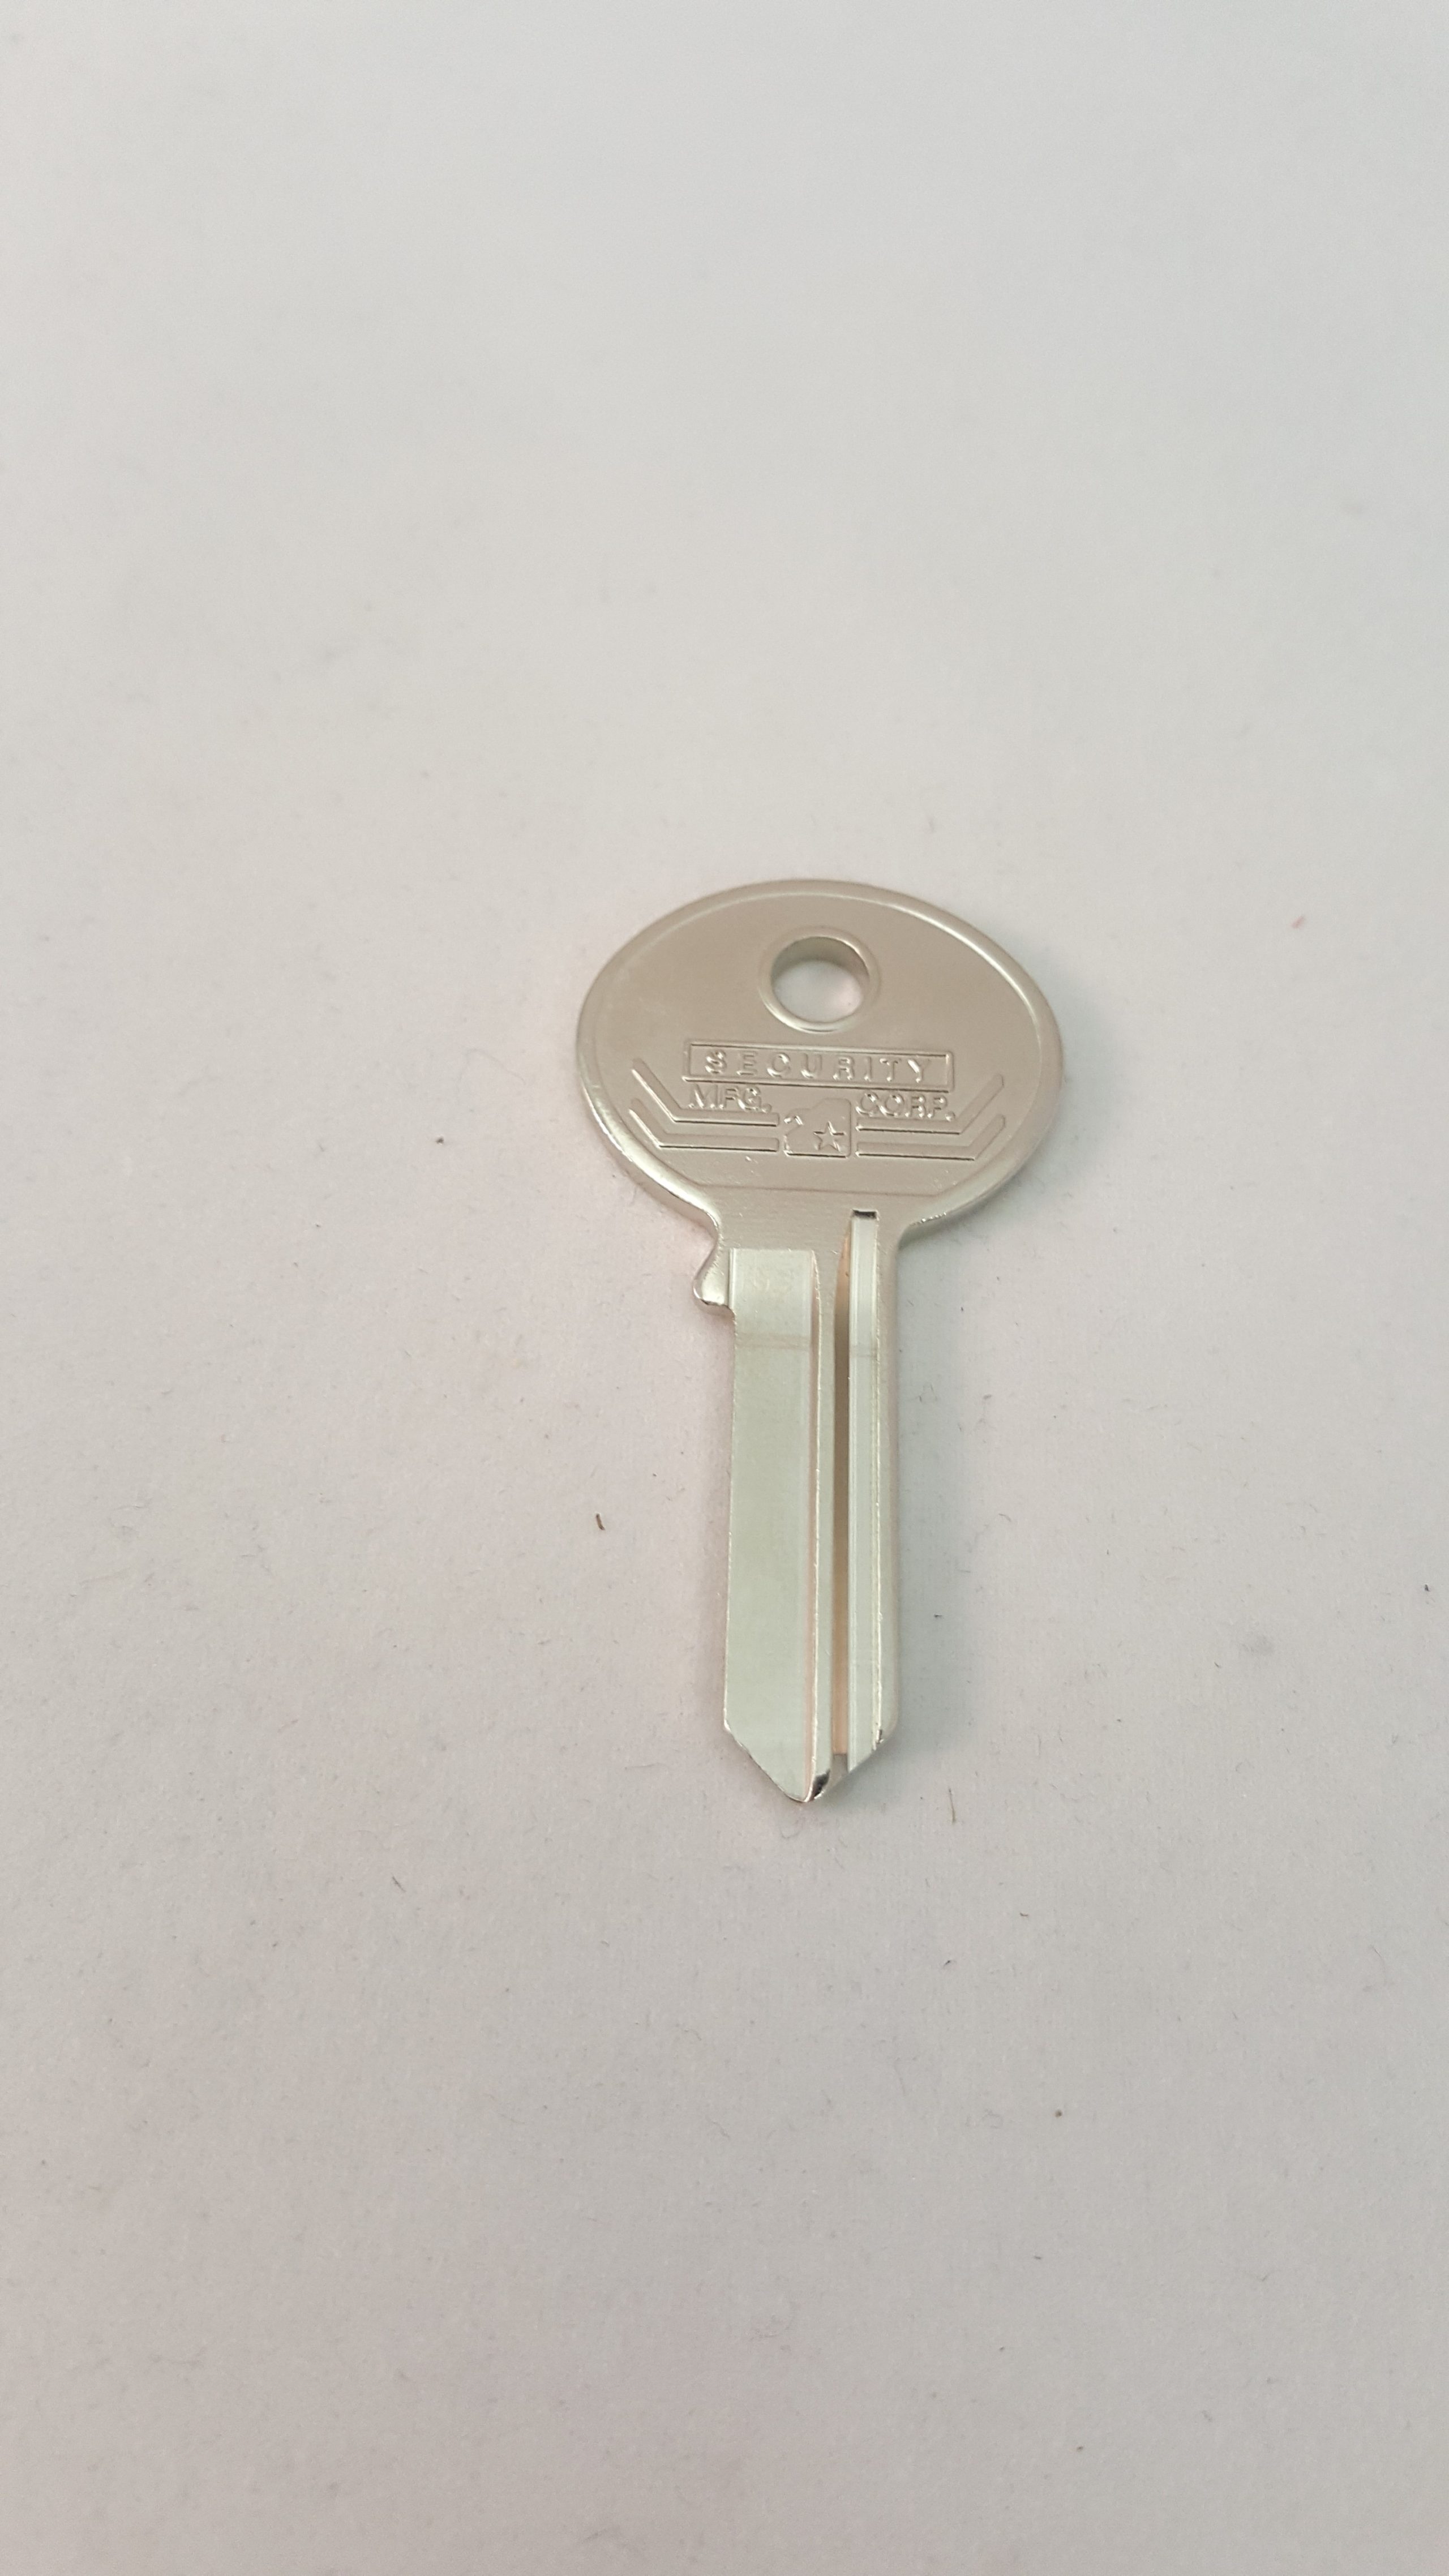 American Locker Key